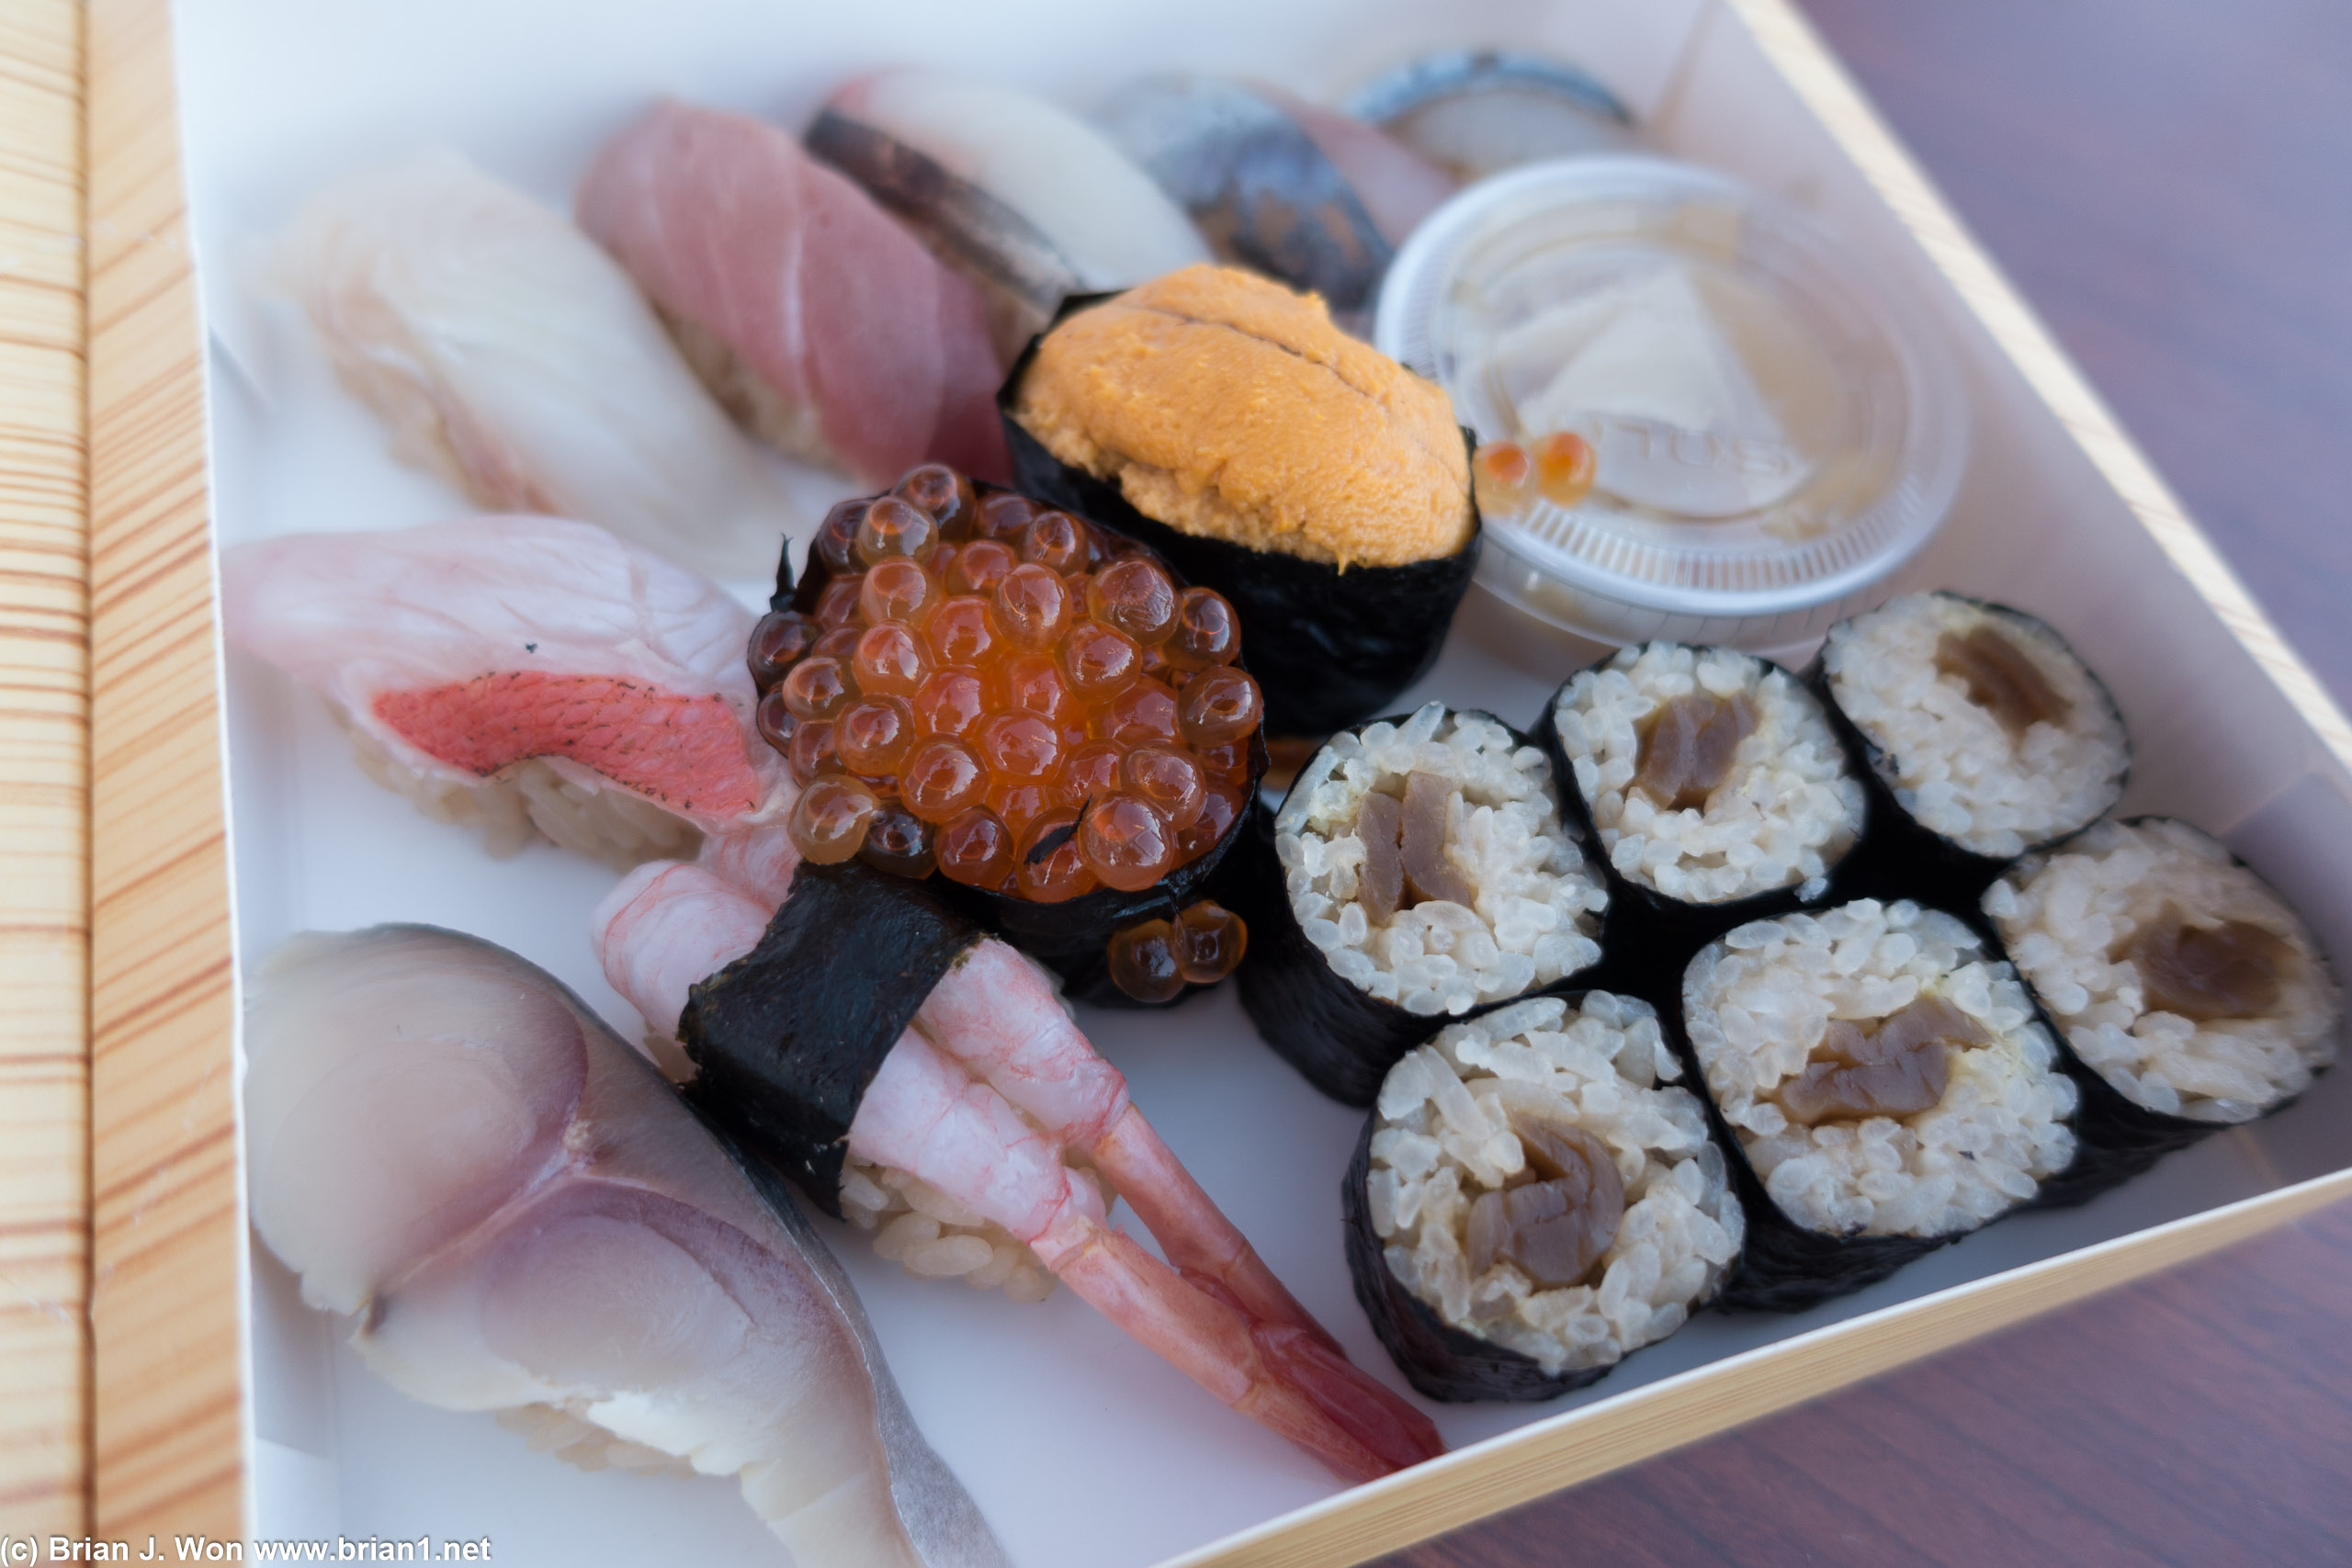 Omakase 10 piece box: maguro (tuna), hirame (halibut), kanpachi (amberjack), aji (Spanish mackerel), ikura (salmon roe), amaebi (live sweet shrimp), kinmedai (golden eye snapper), sayori (needle fish), uni (sea urchin), kanpyo roll (squash).